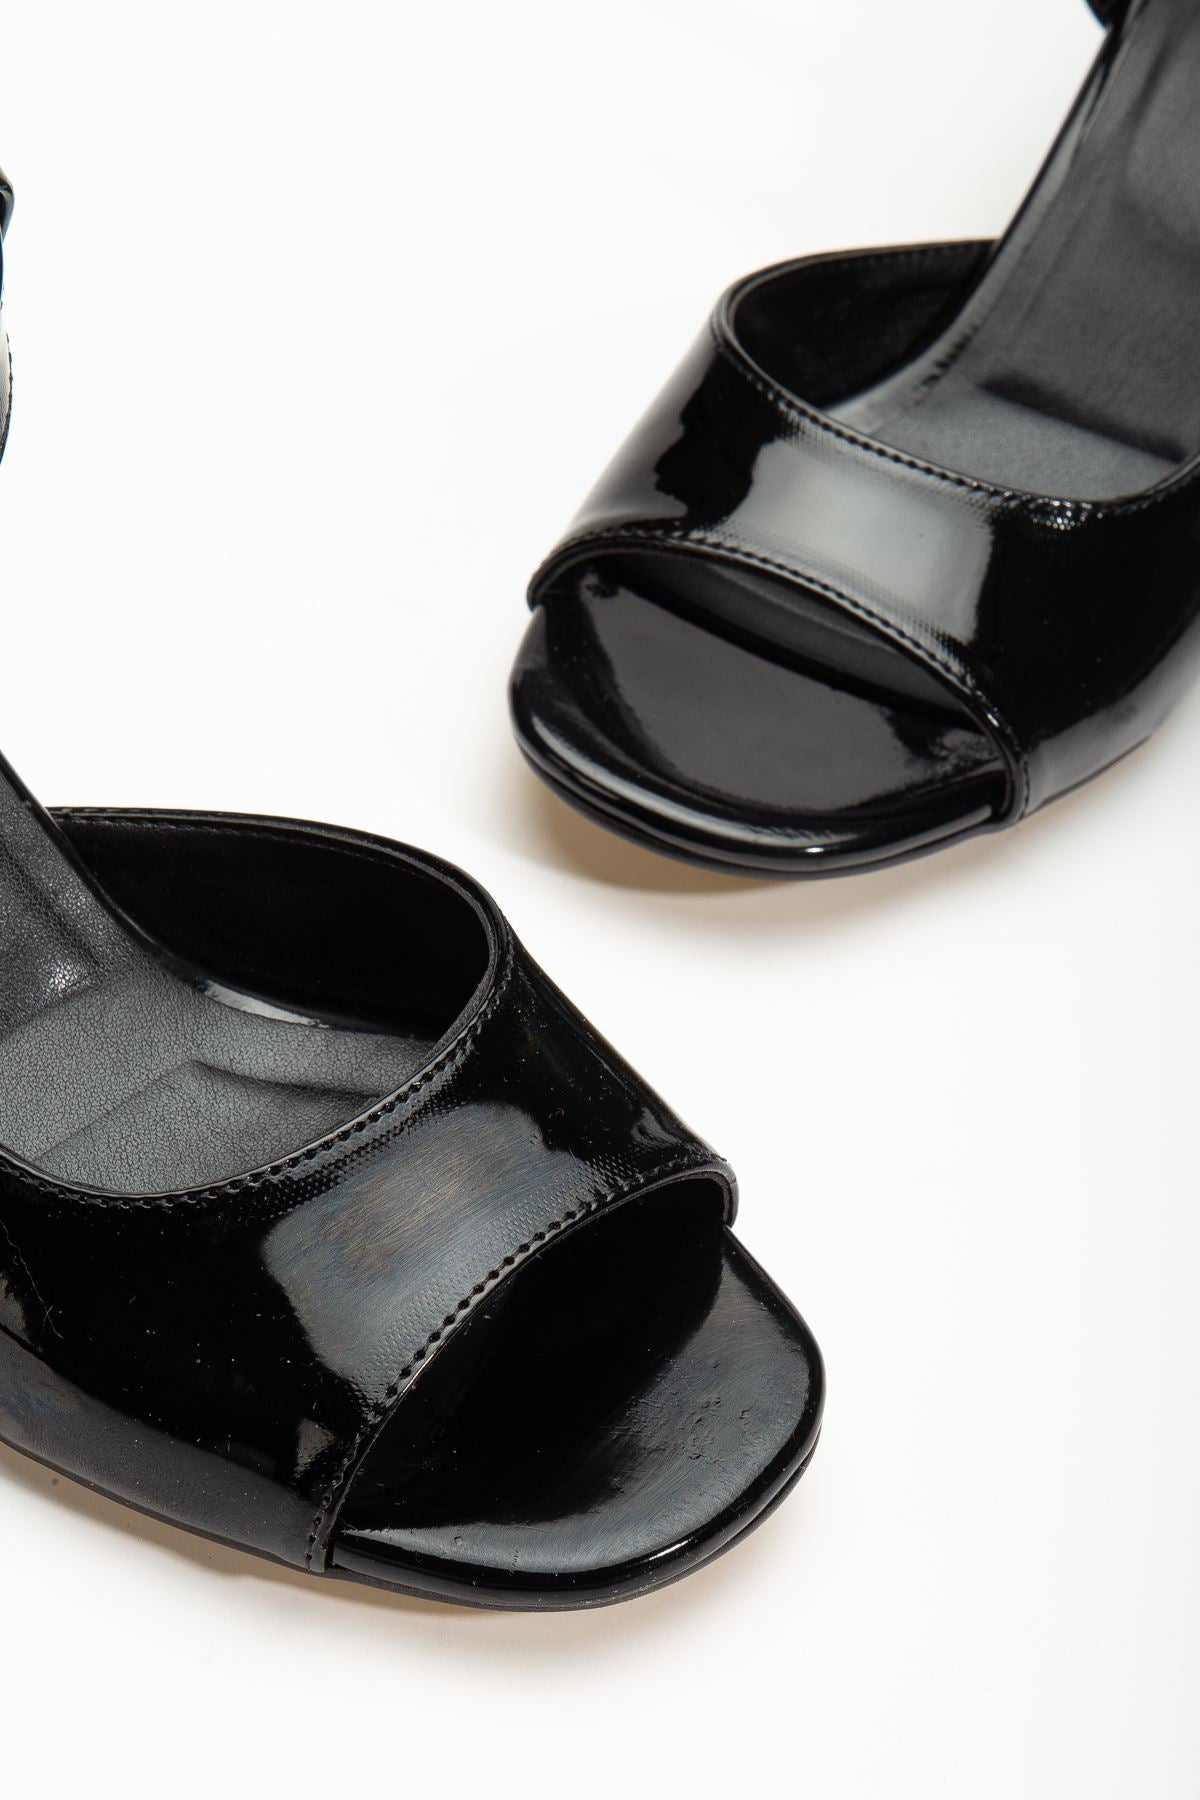 Keri Heeled Black Patent Leather Blunt Toe Women's Shoes - STREETMODE™